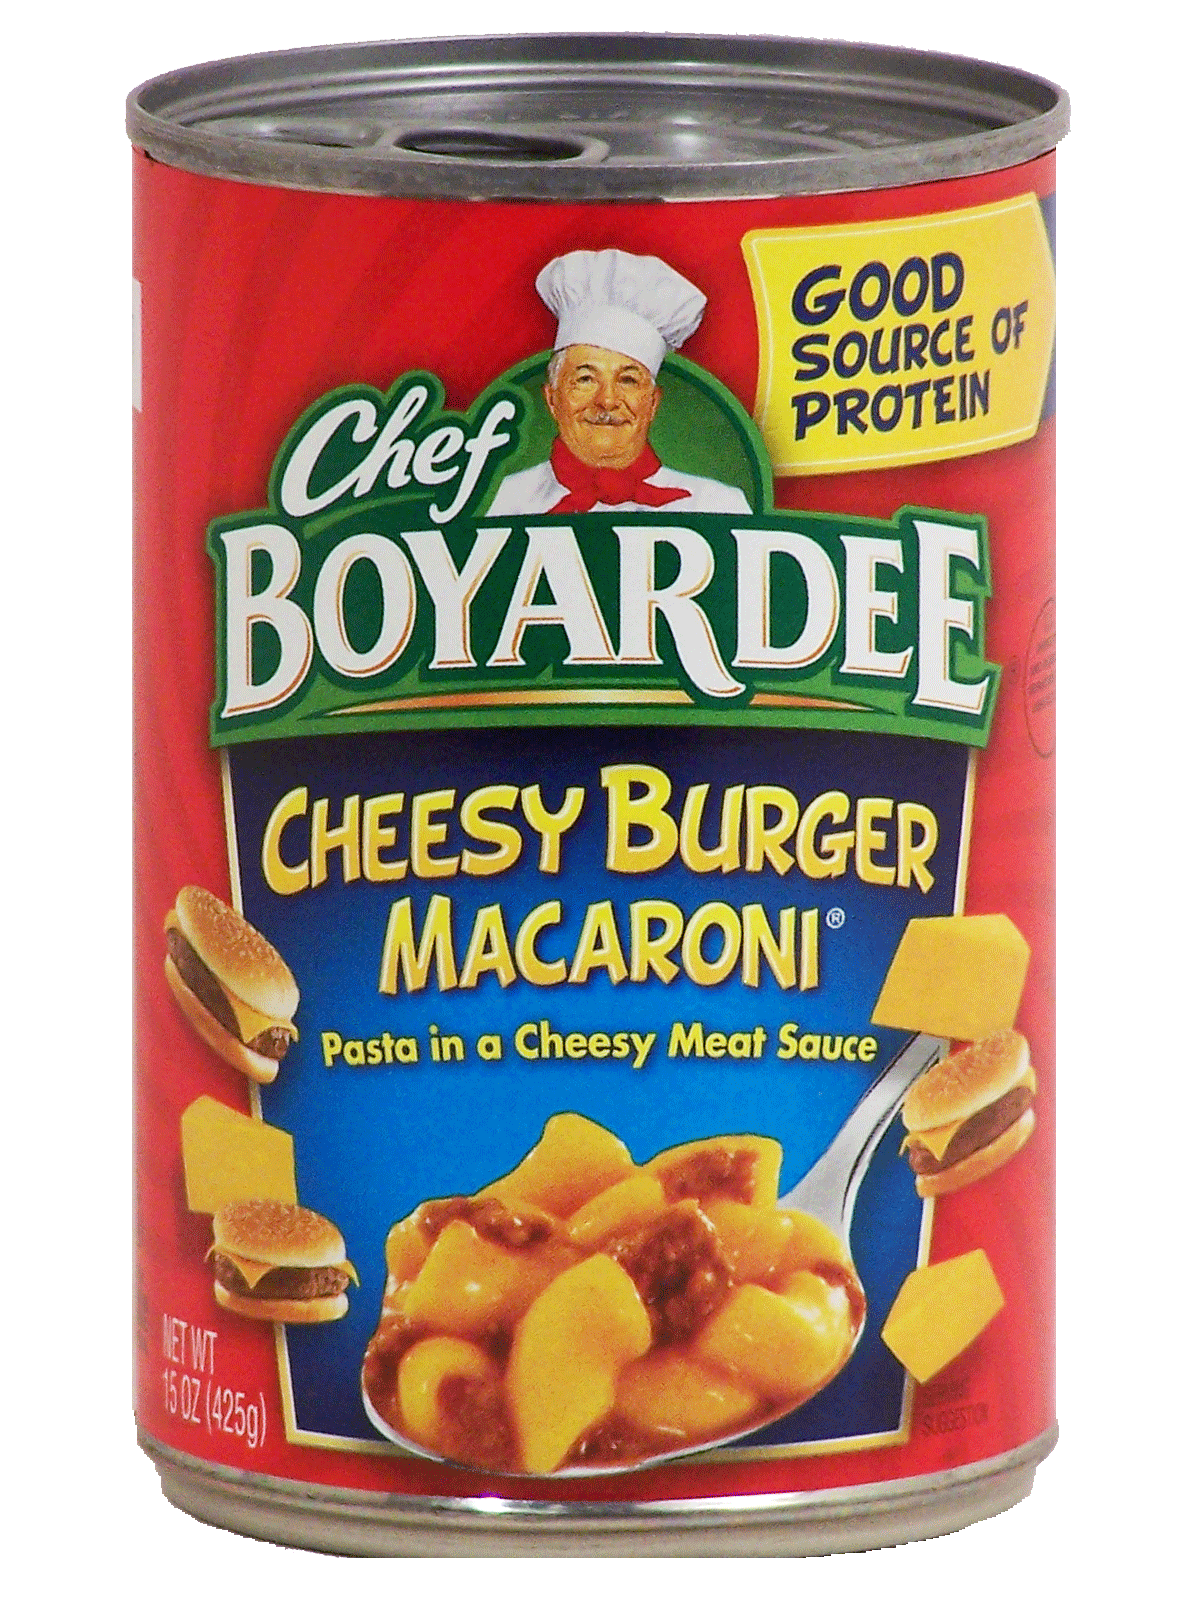 Chef Boyardee Cheesy Burger Macaroni in a cheesy meat sauce Full-Size Picture